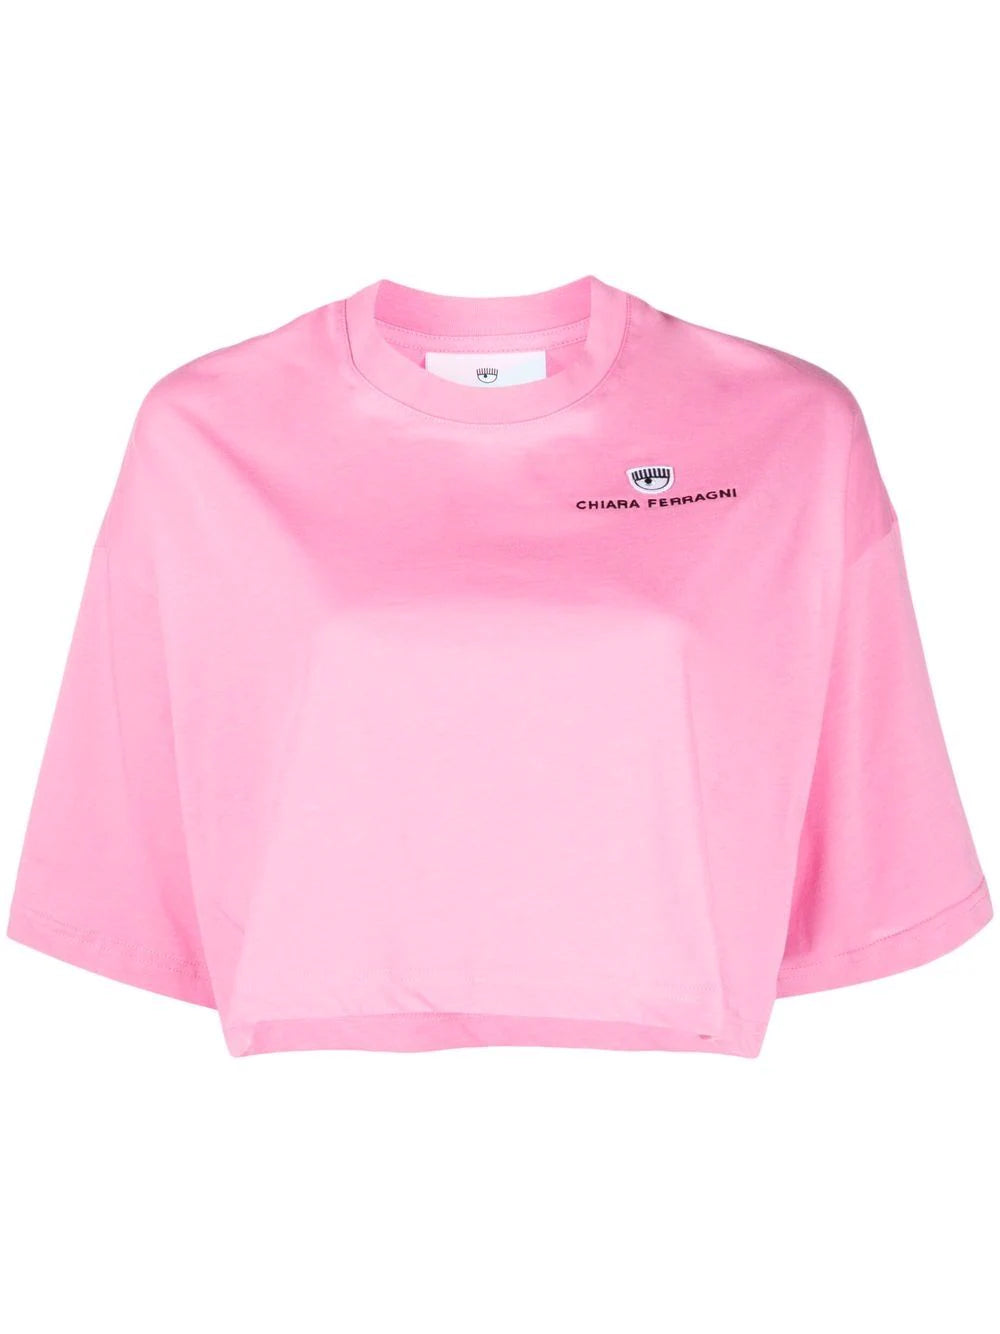 T-Shirt Crop Chiara Ferragni / Rosa - Ideal Moda